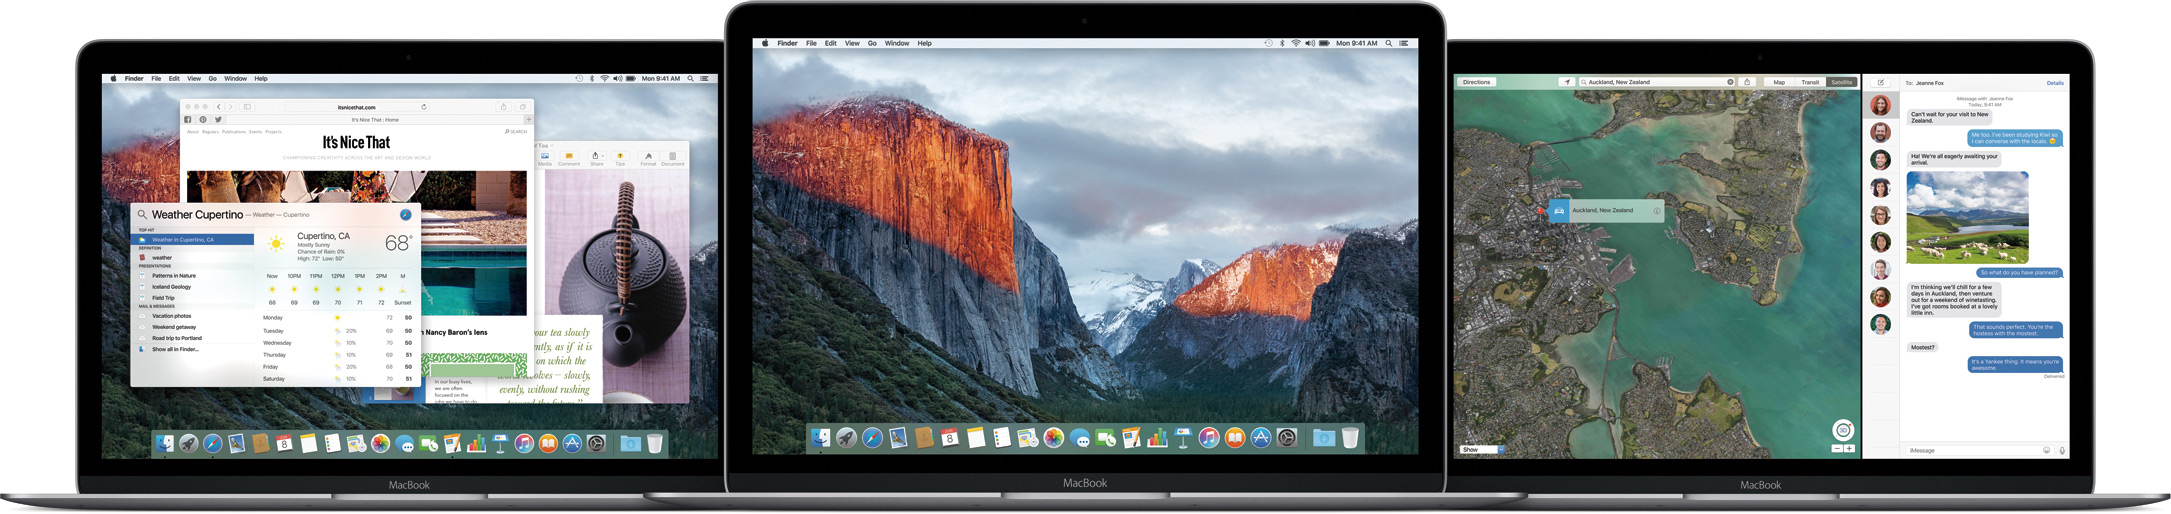 OS X El Capitan em MacBooks